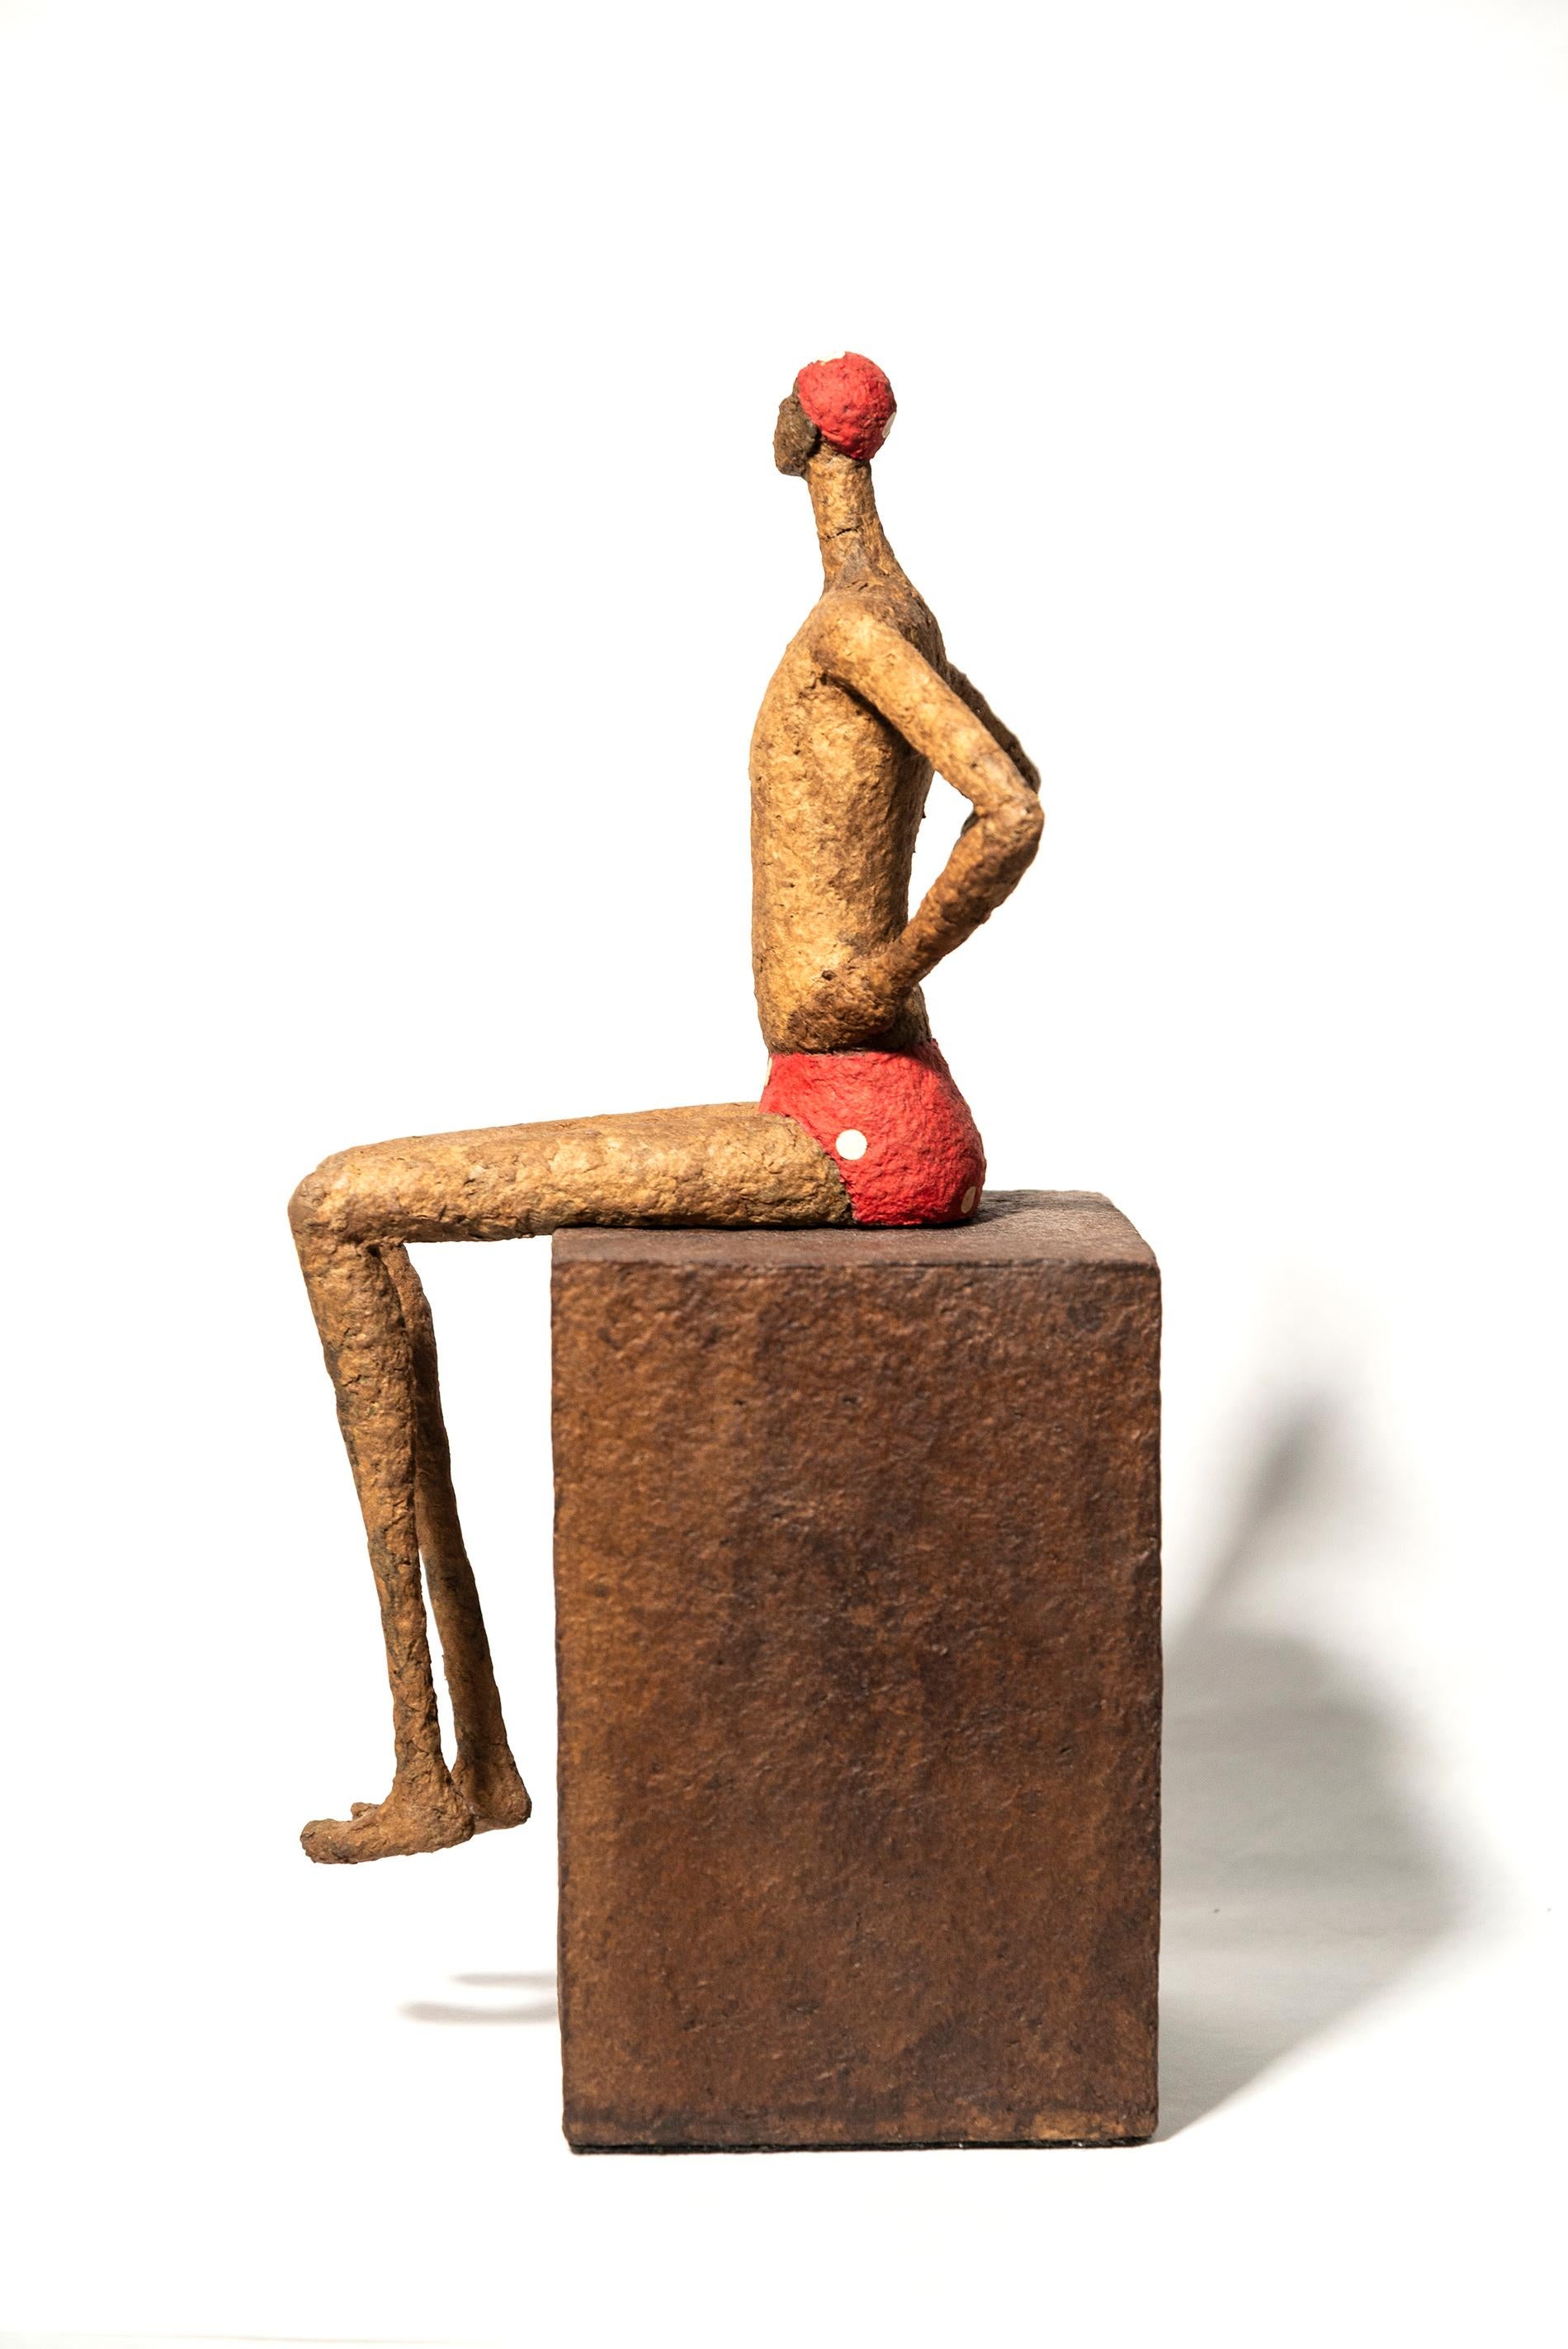 Baigneur à pois (Polka dot Swimmer) - figurative, male, paper mache sculpture For Sale 2